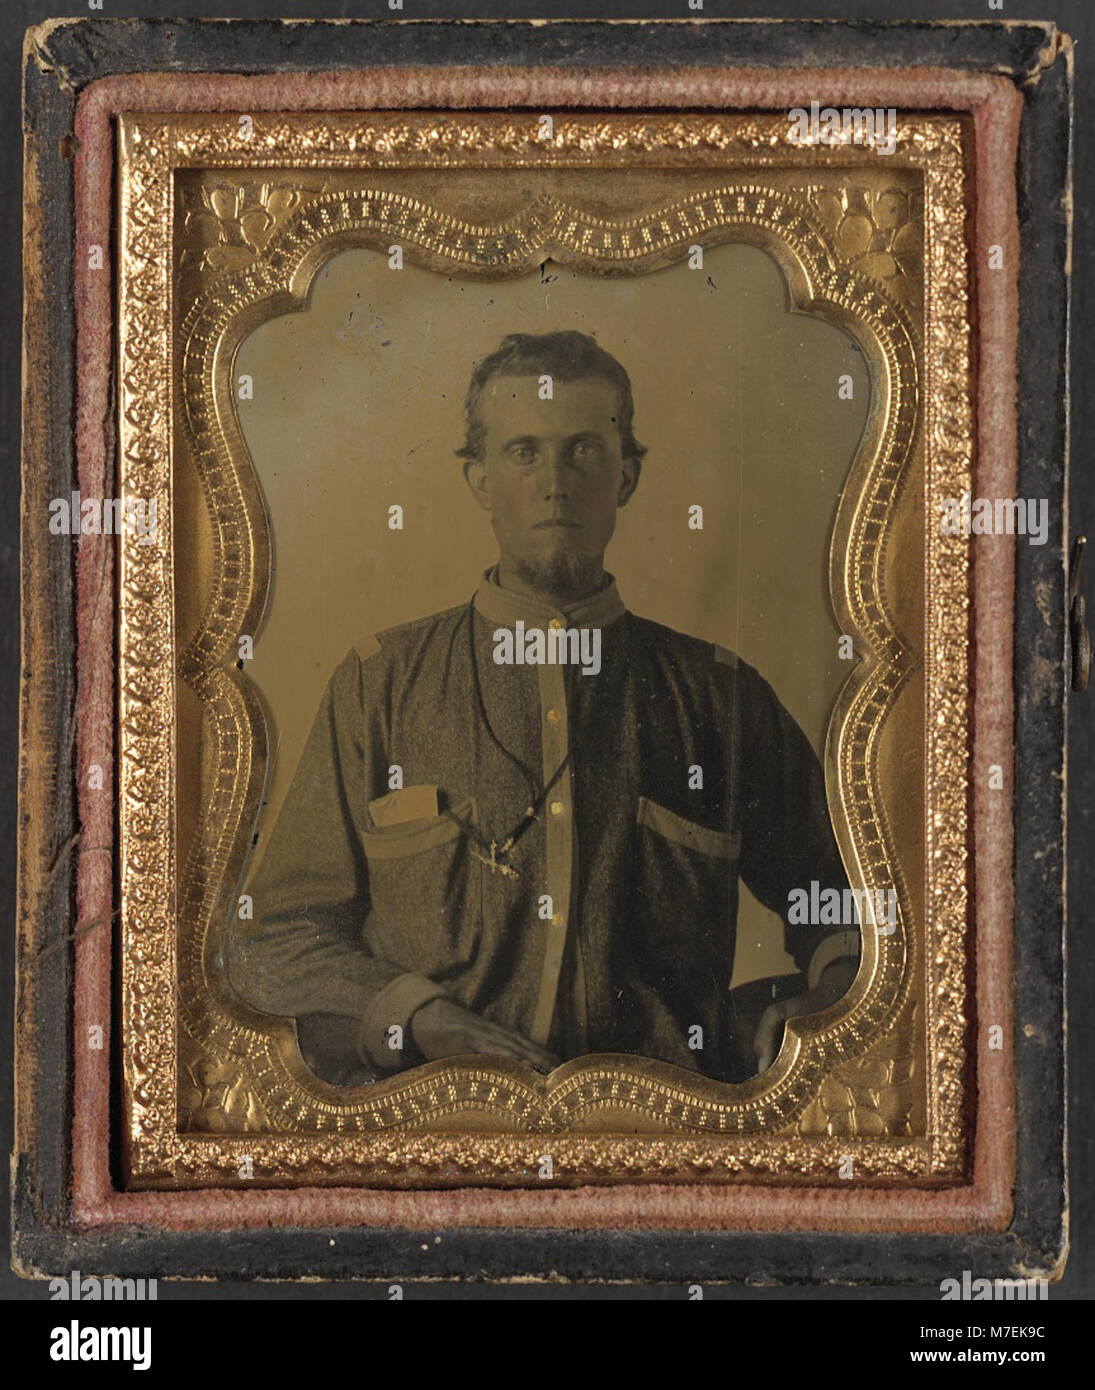 Private Reuben Goodson of Co. G, 52nd North Carolina Infantry Regiment in uniform LCCN2012650016 Stock Photo